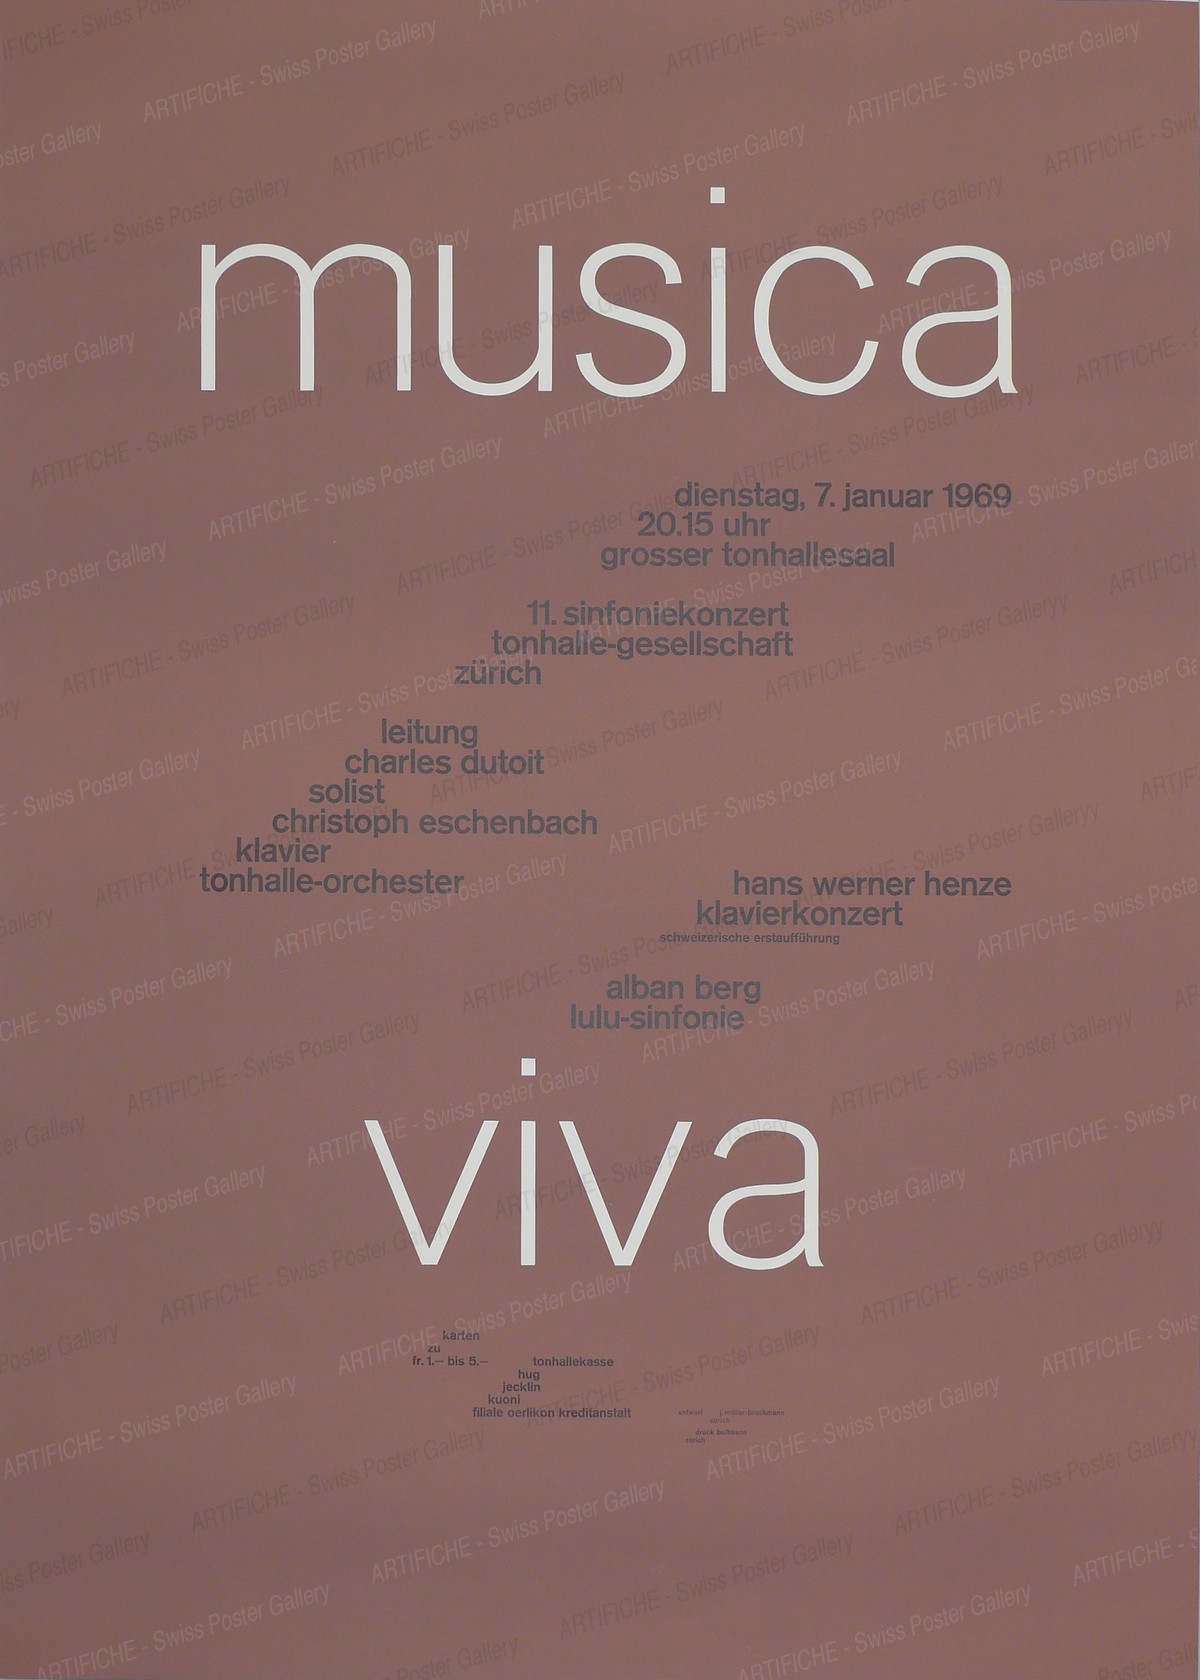 musica viva – 11. Sinfoniekonzert tonhalle Zürich, Josef Müller-Brockmann